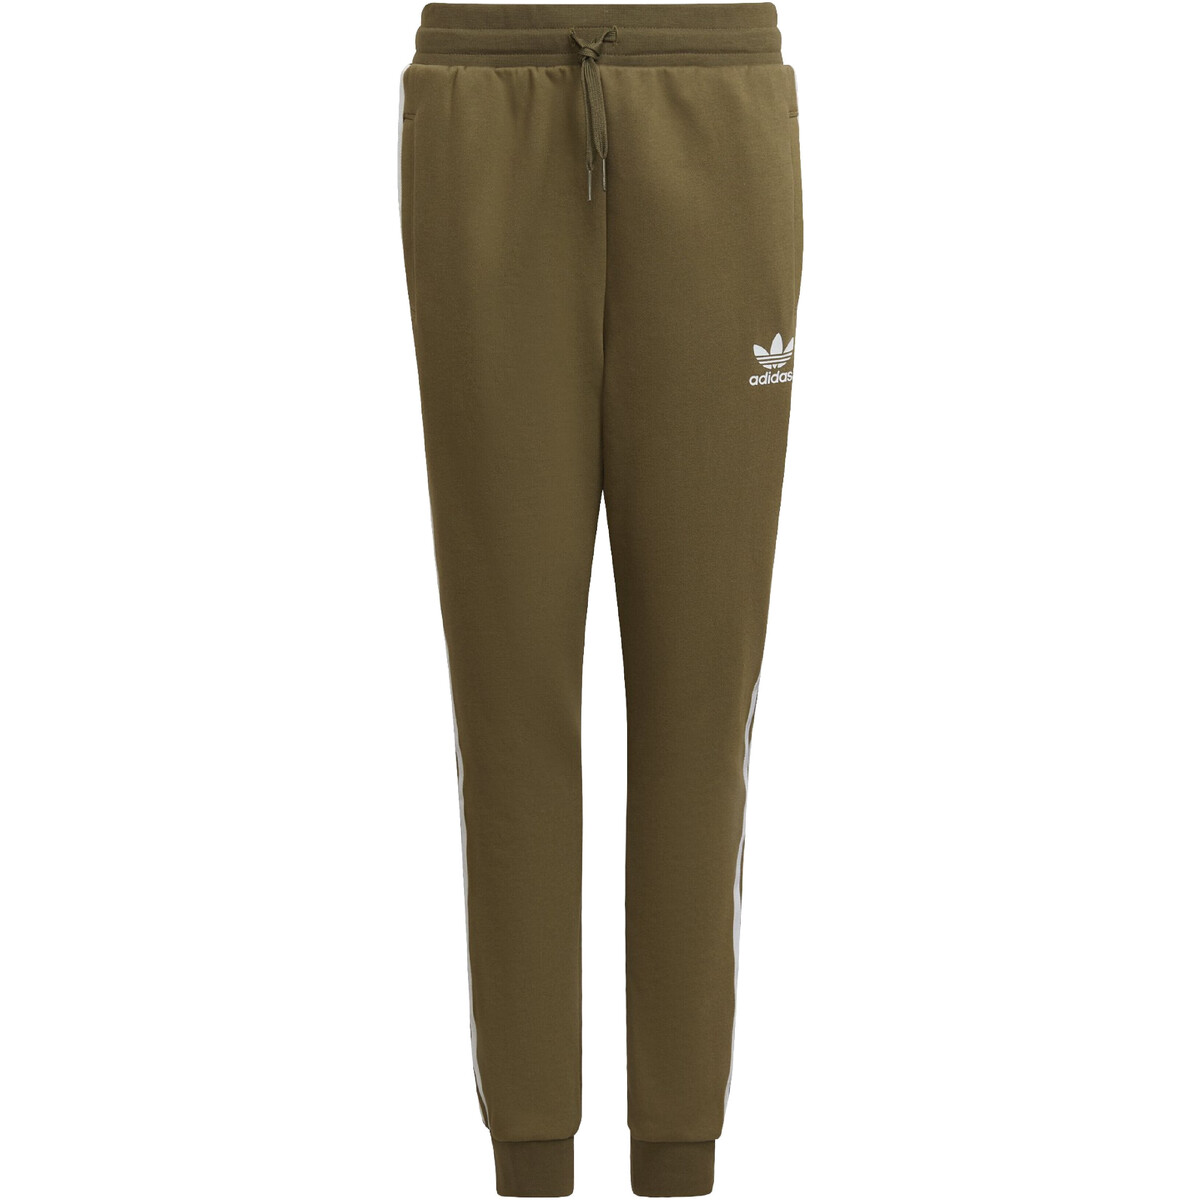 Vêtements Garçon Pantalons de survêtement adidas Originals HD2048 Vert